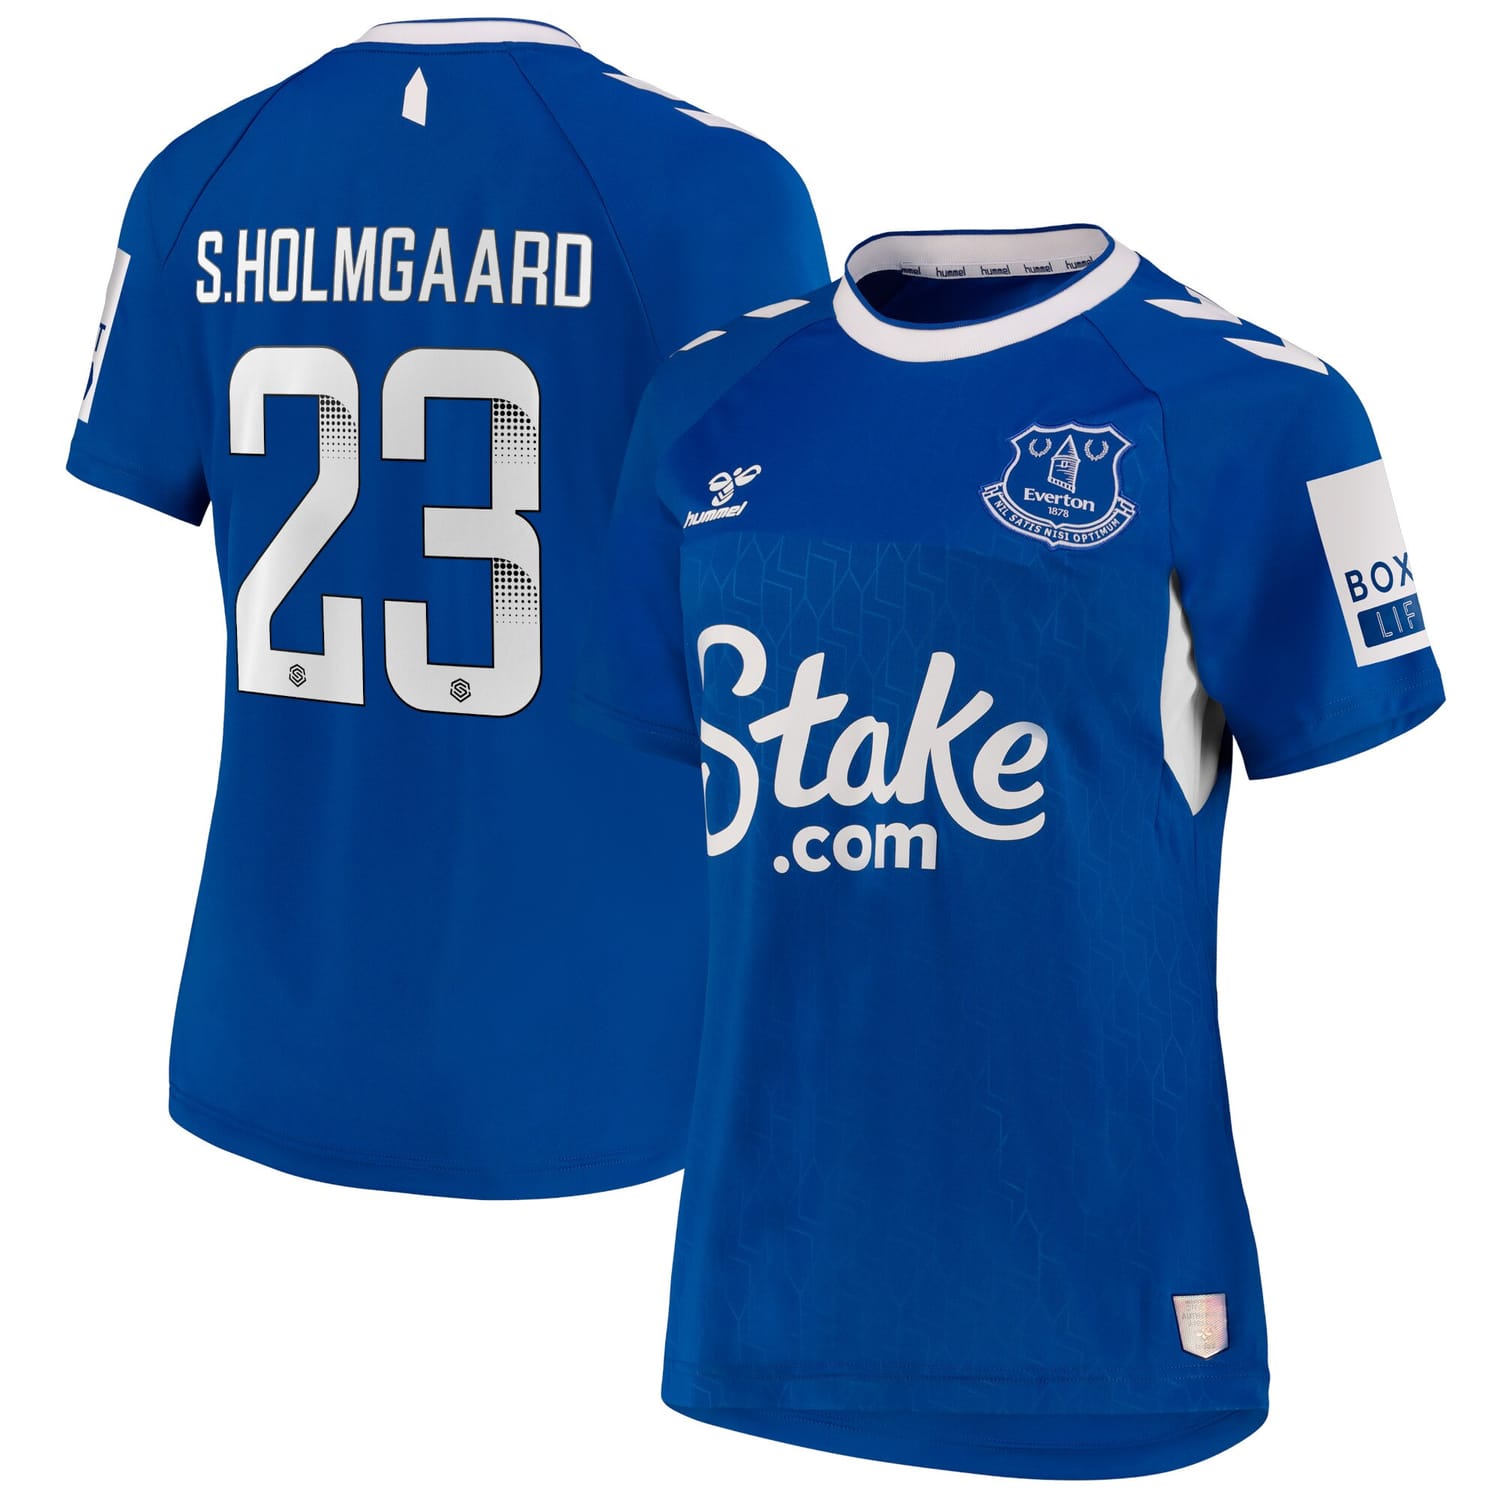 Premier League Everton Home Jersey Shirt 2022-23 player Sara Holmgaard 23 printing for Women